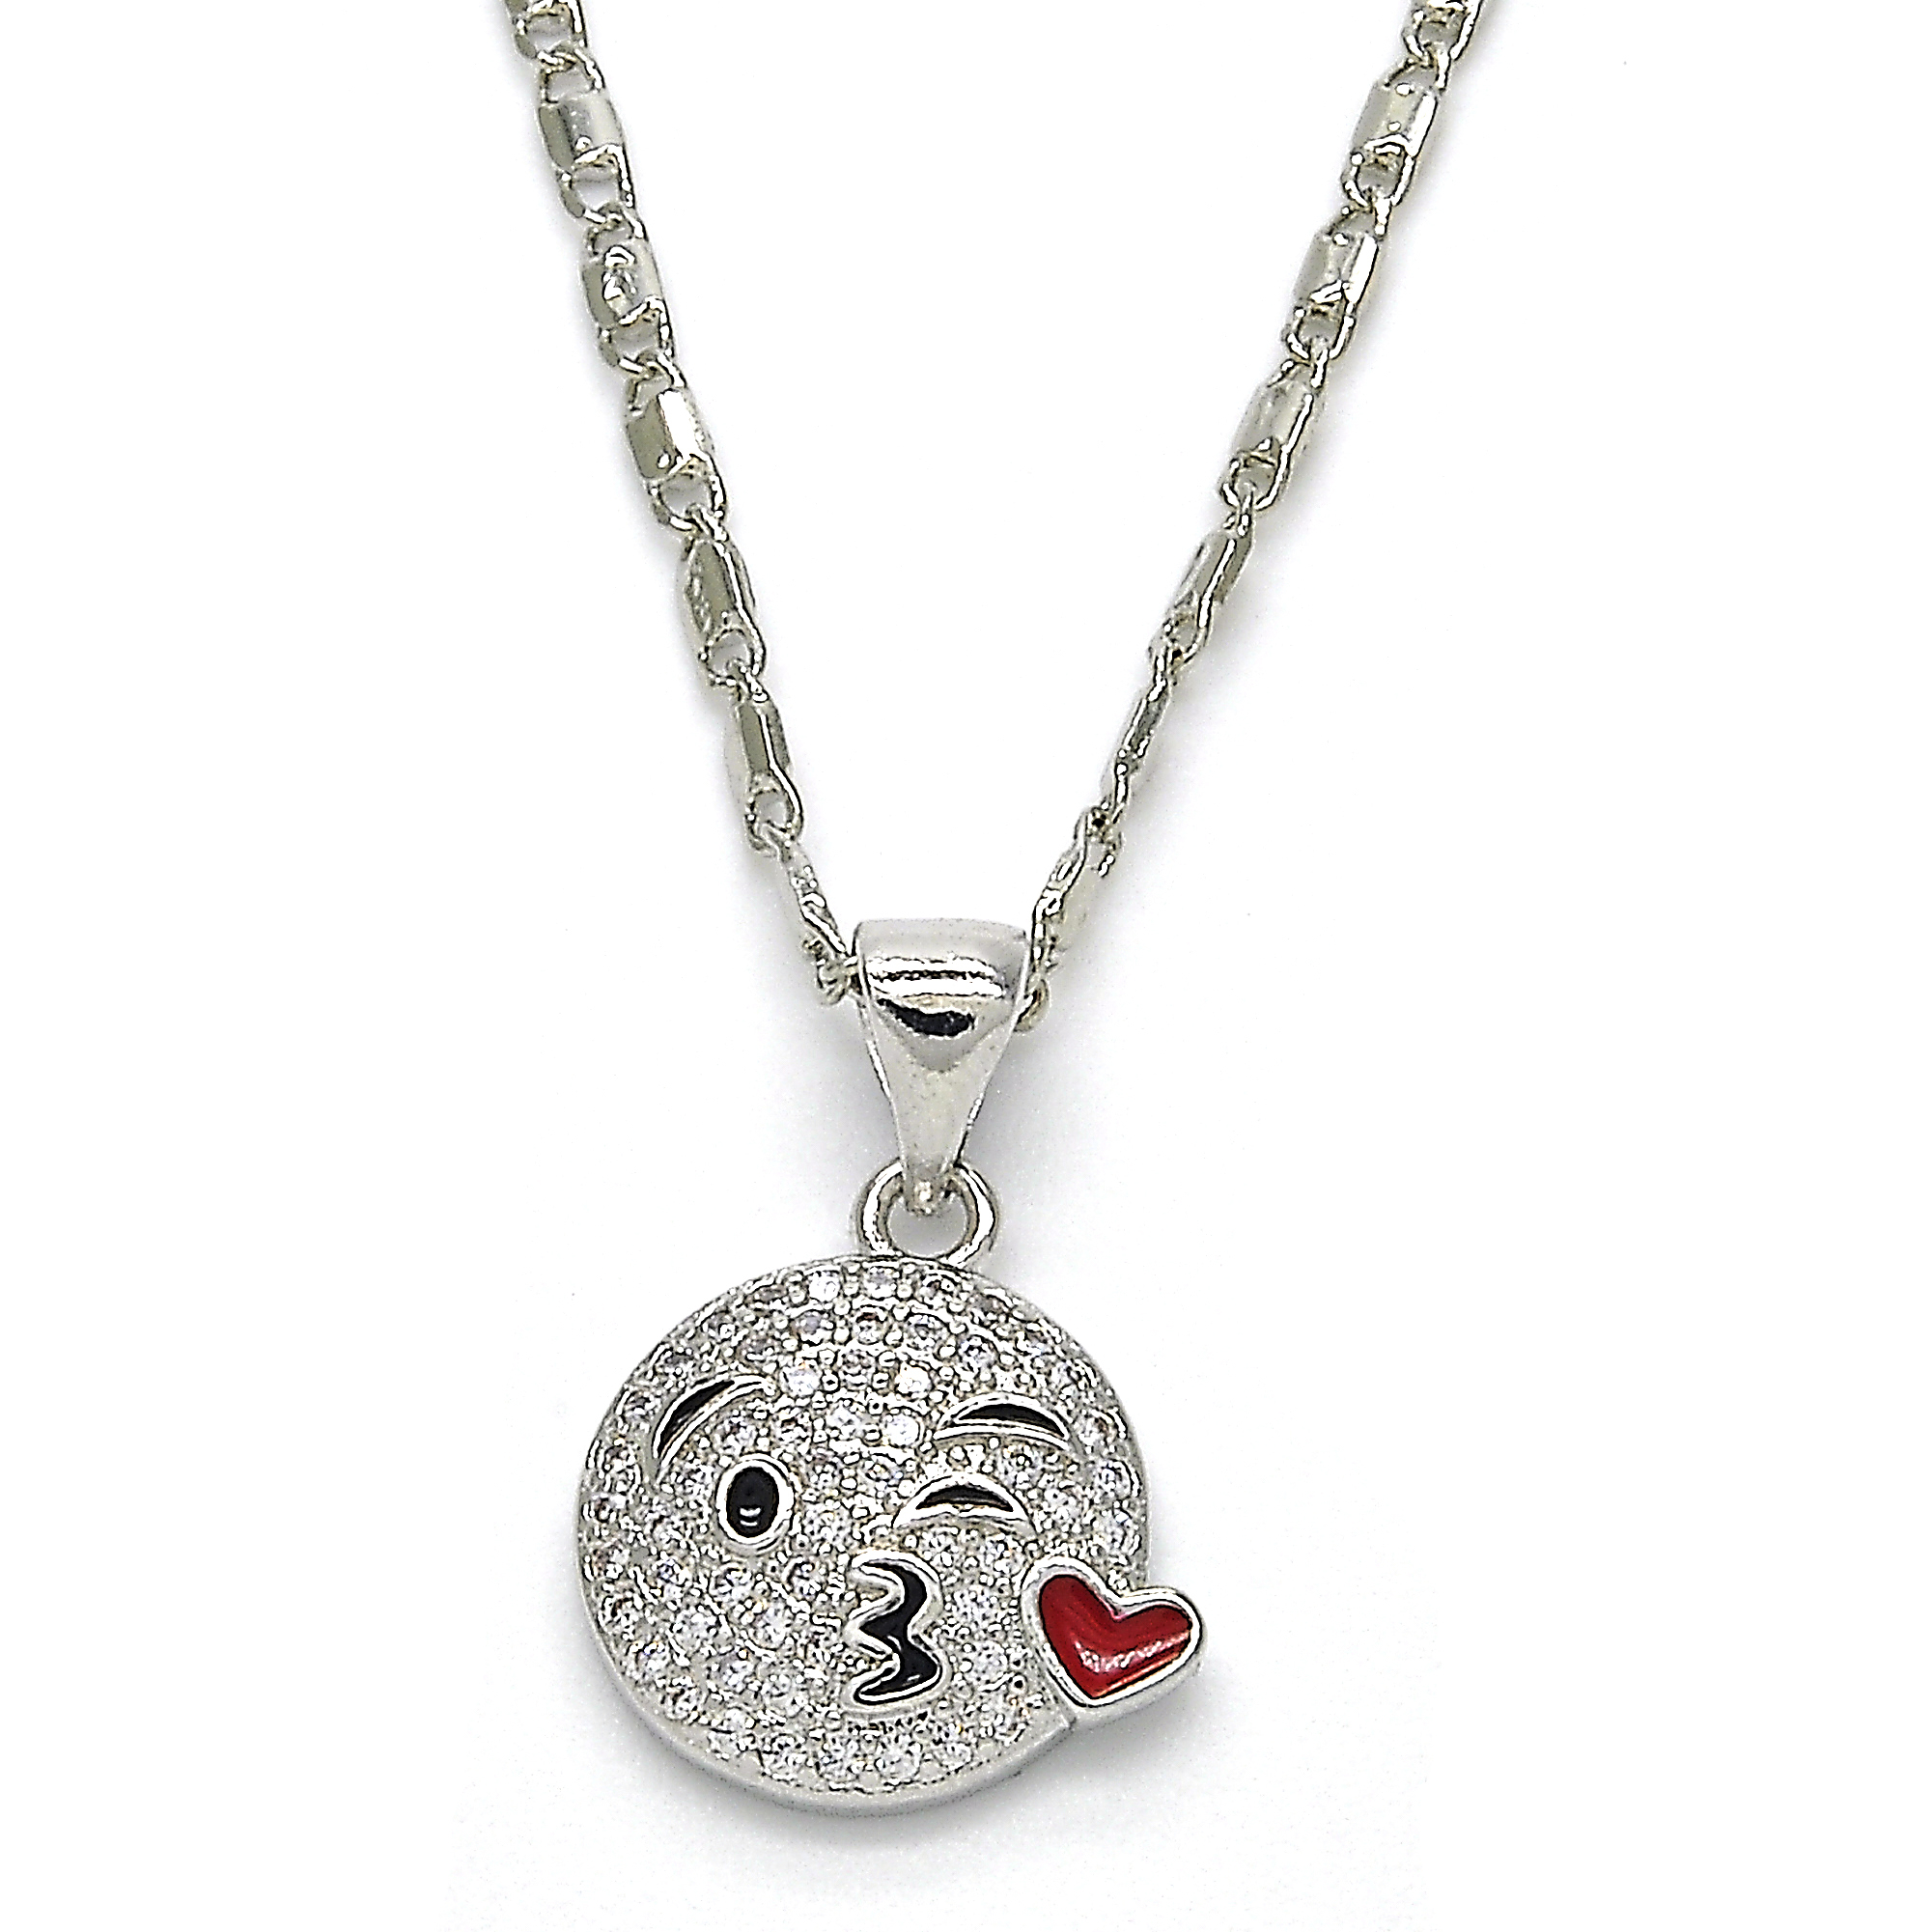 Rhodium Filled High Polish Finsh Fancy Necklace, Heart Design, With Cubic Zirconia, Rhodium Tone